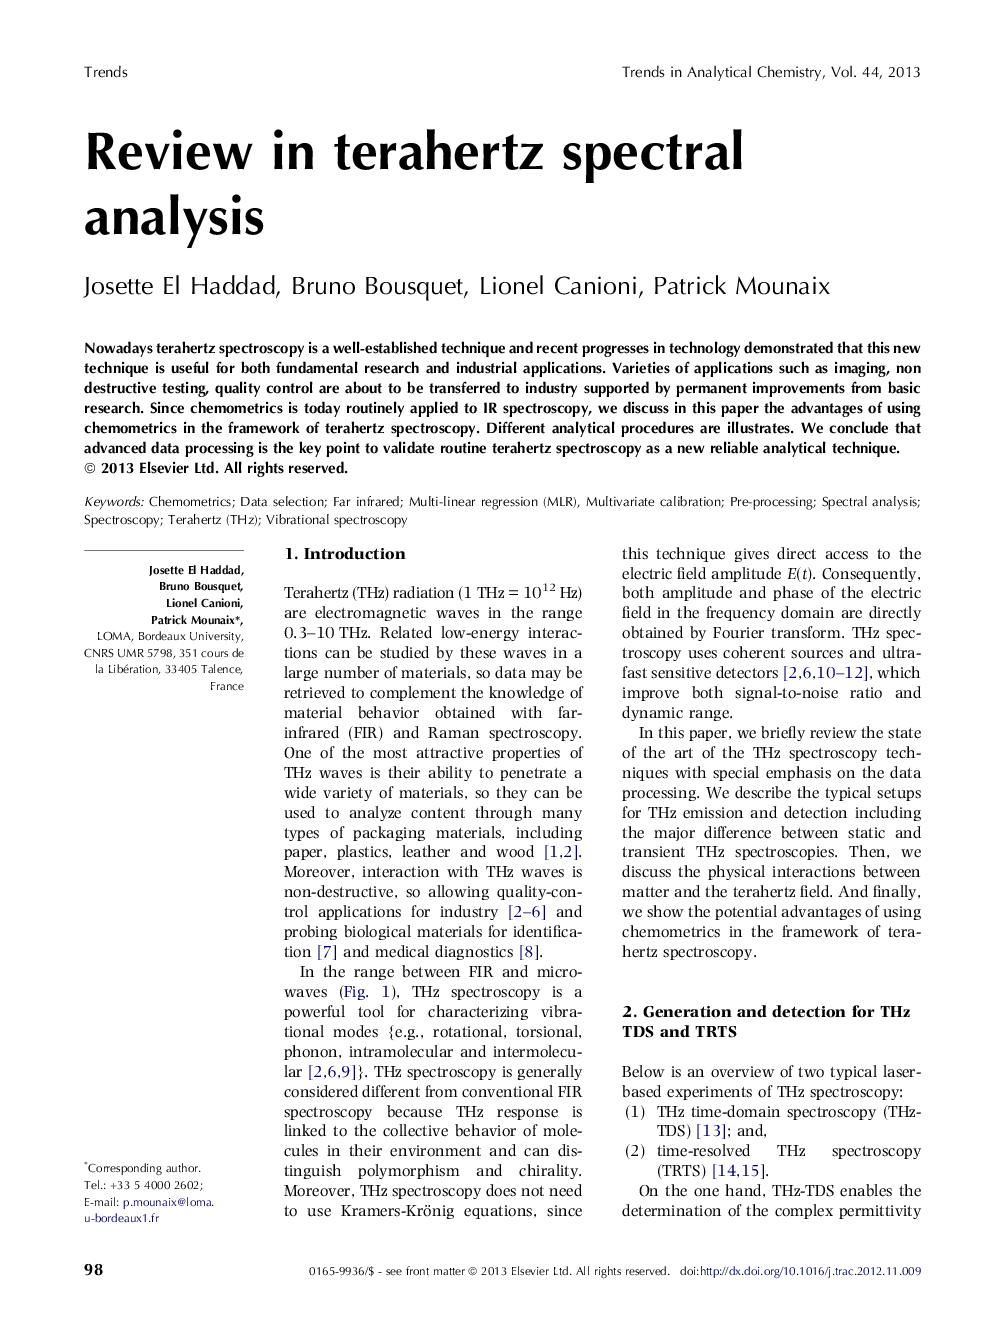 Review in terahertz spectral analysis